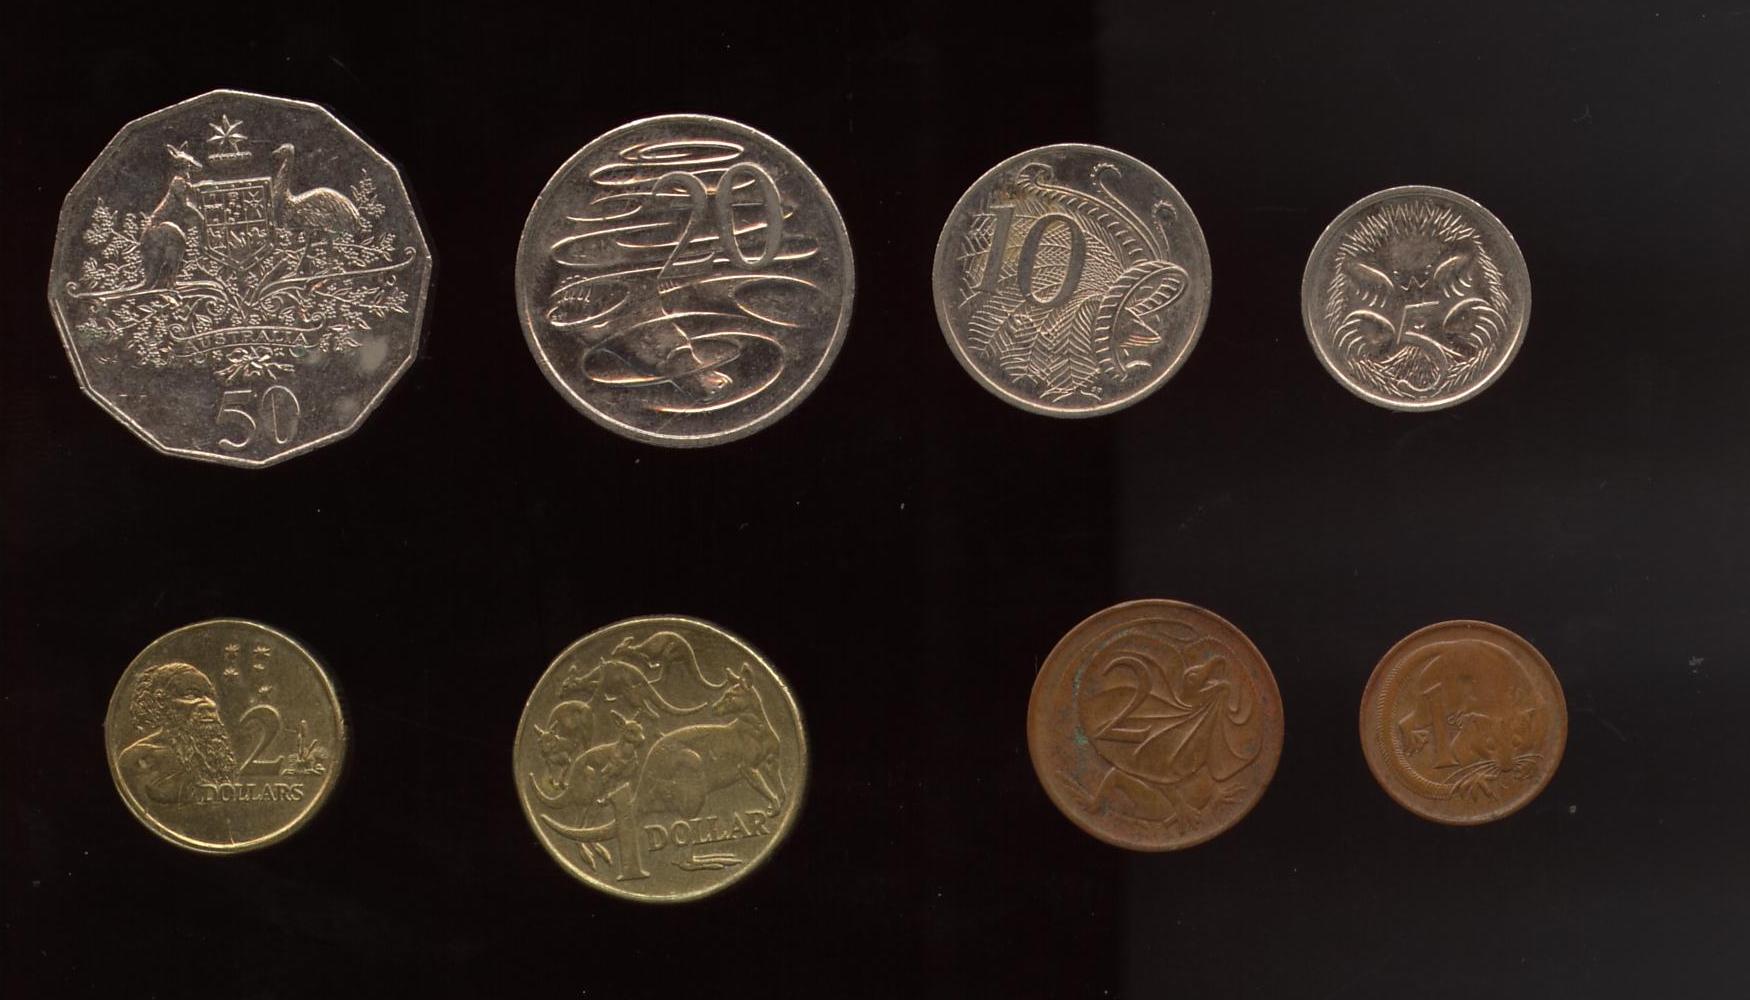 coins australia